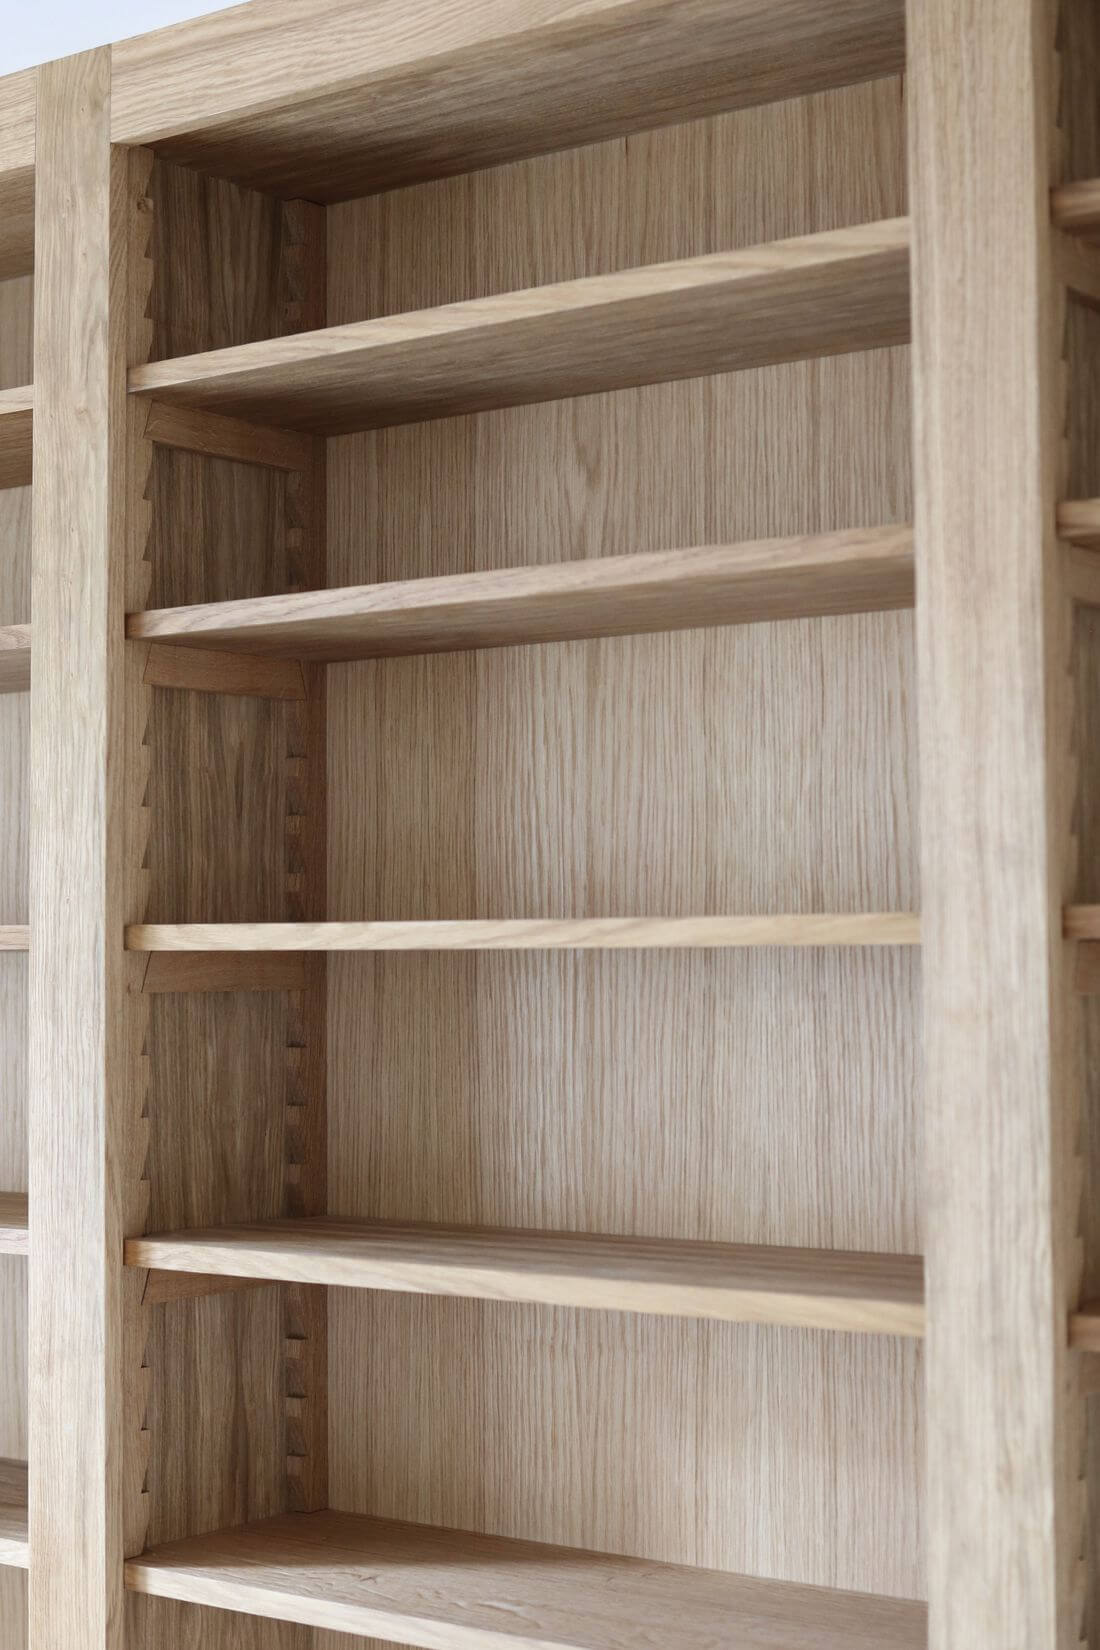 Bespoke wooden shelving unit